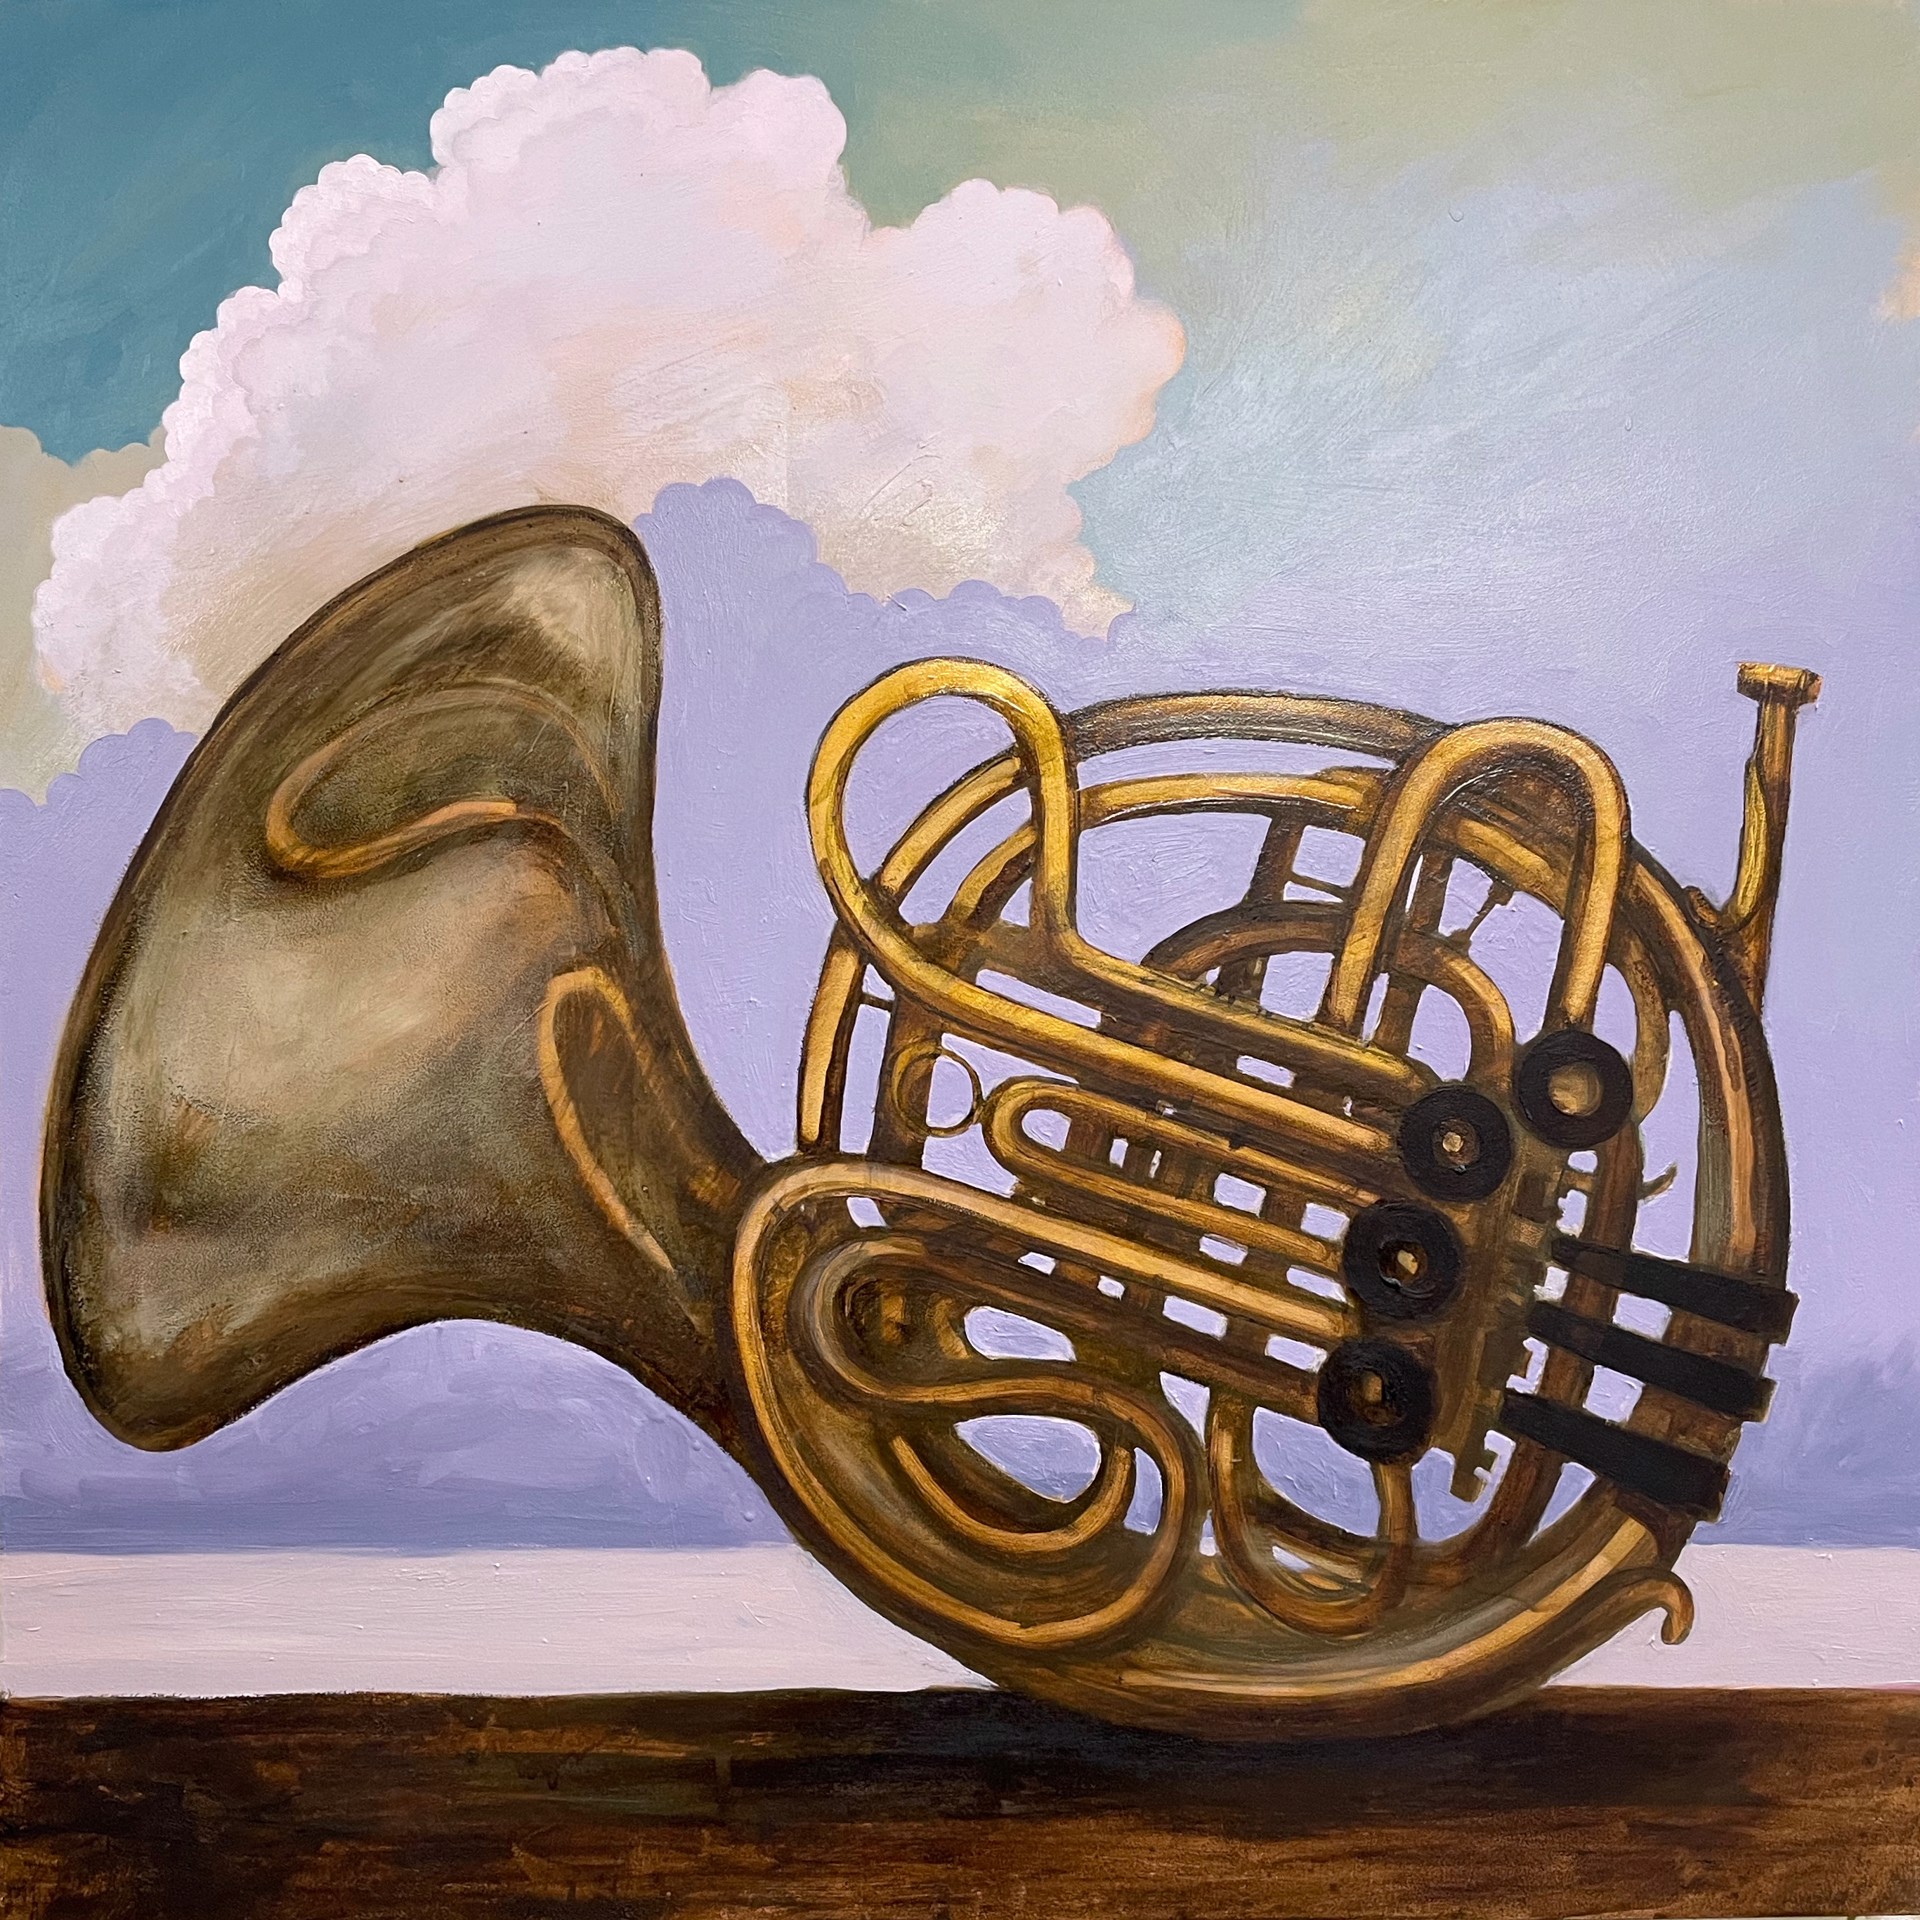 French Horn by Matt Lively